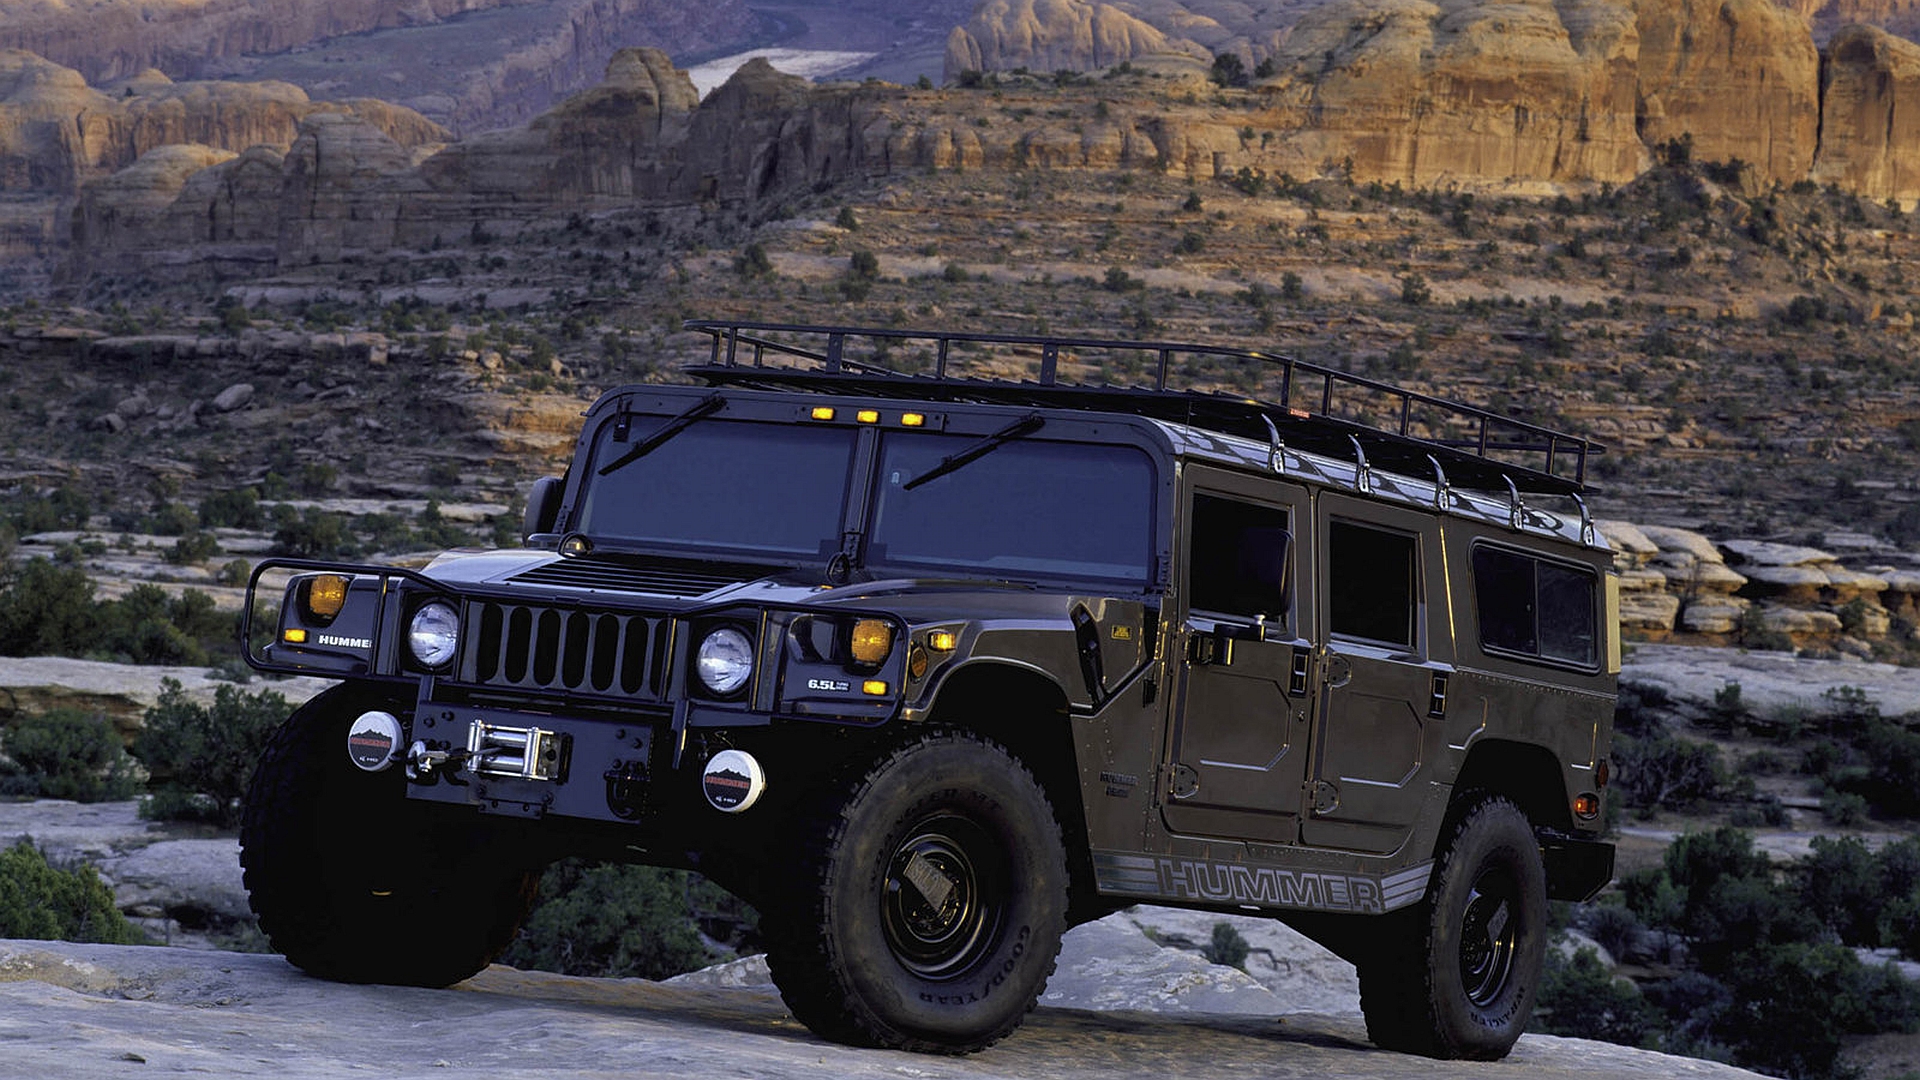 White Hummer driving through a rugged terrain, ready for adventure.